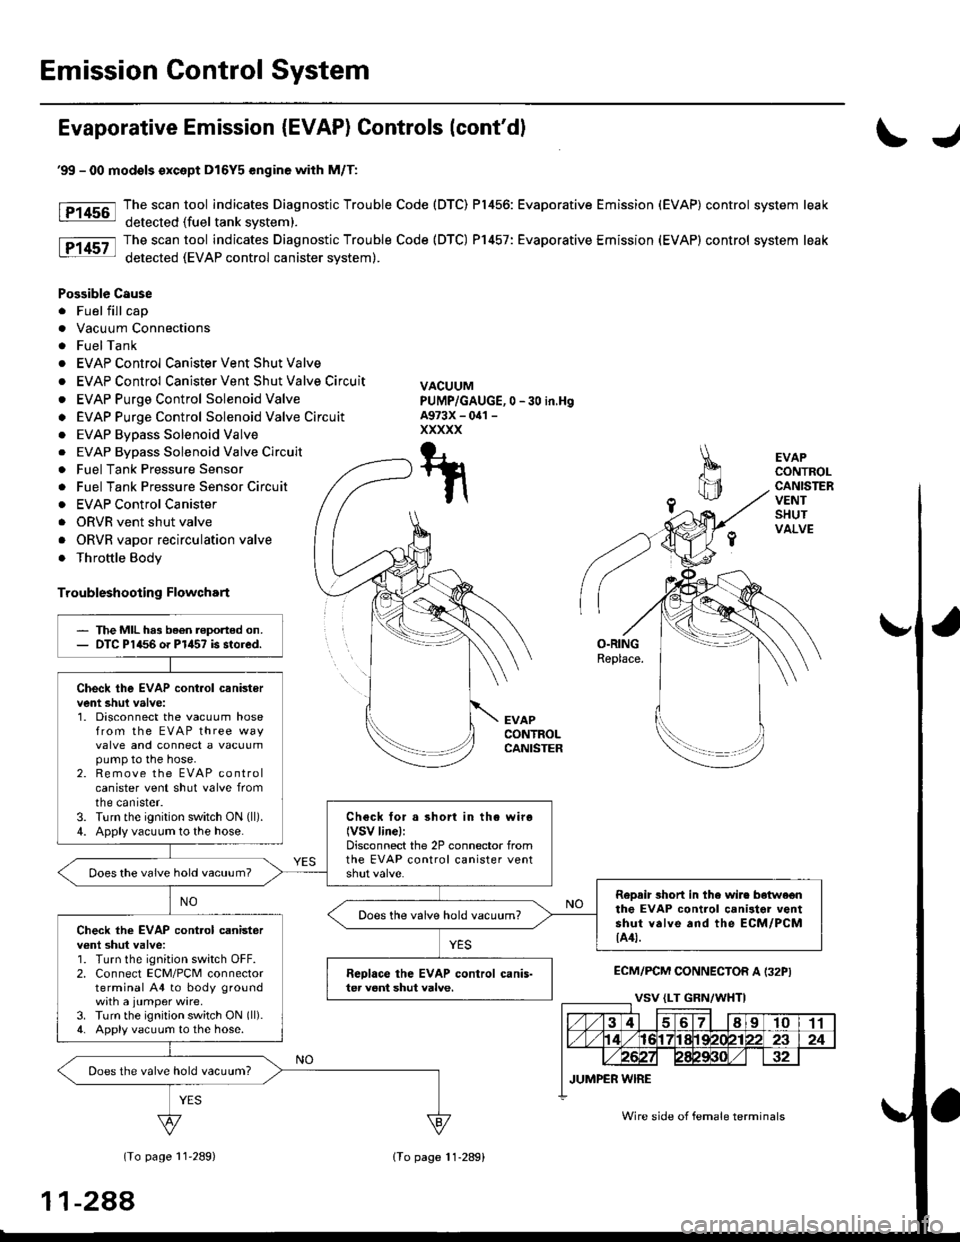 HONDA CIVIC 1996 6.G Service Manual Emission Control System
Evaporative Emission {EVAP) Controls (contdl
\J
tF1456-l
tP14sz-l
EVAPCONTROLCANISTERVENTSHUTVALVE
O.RINGReplace.
EVAPCONTROLCANISTER
ECM/PCM CONNECTOR A I32PI
(To page 11289